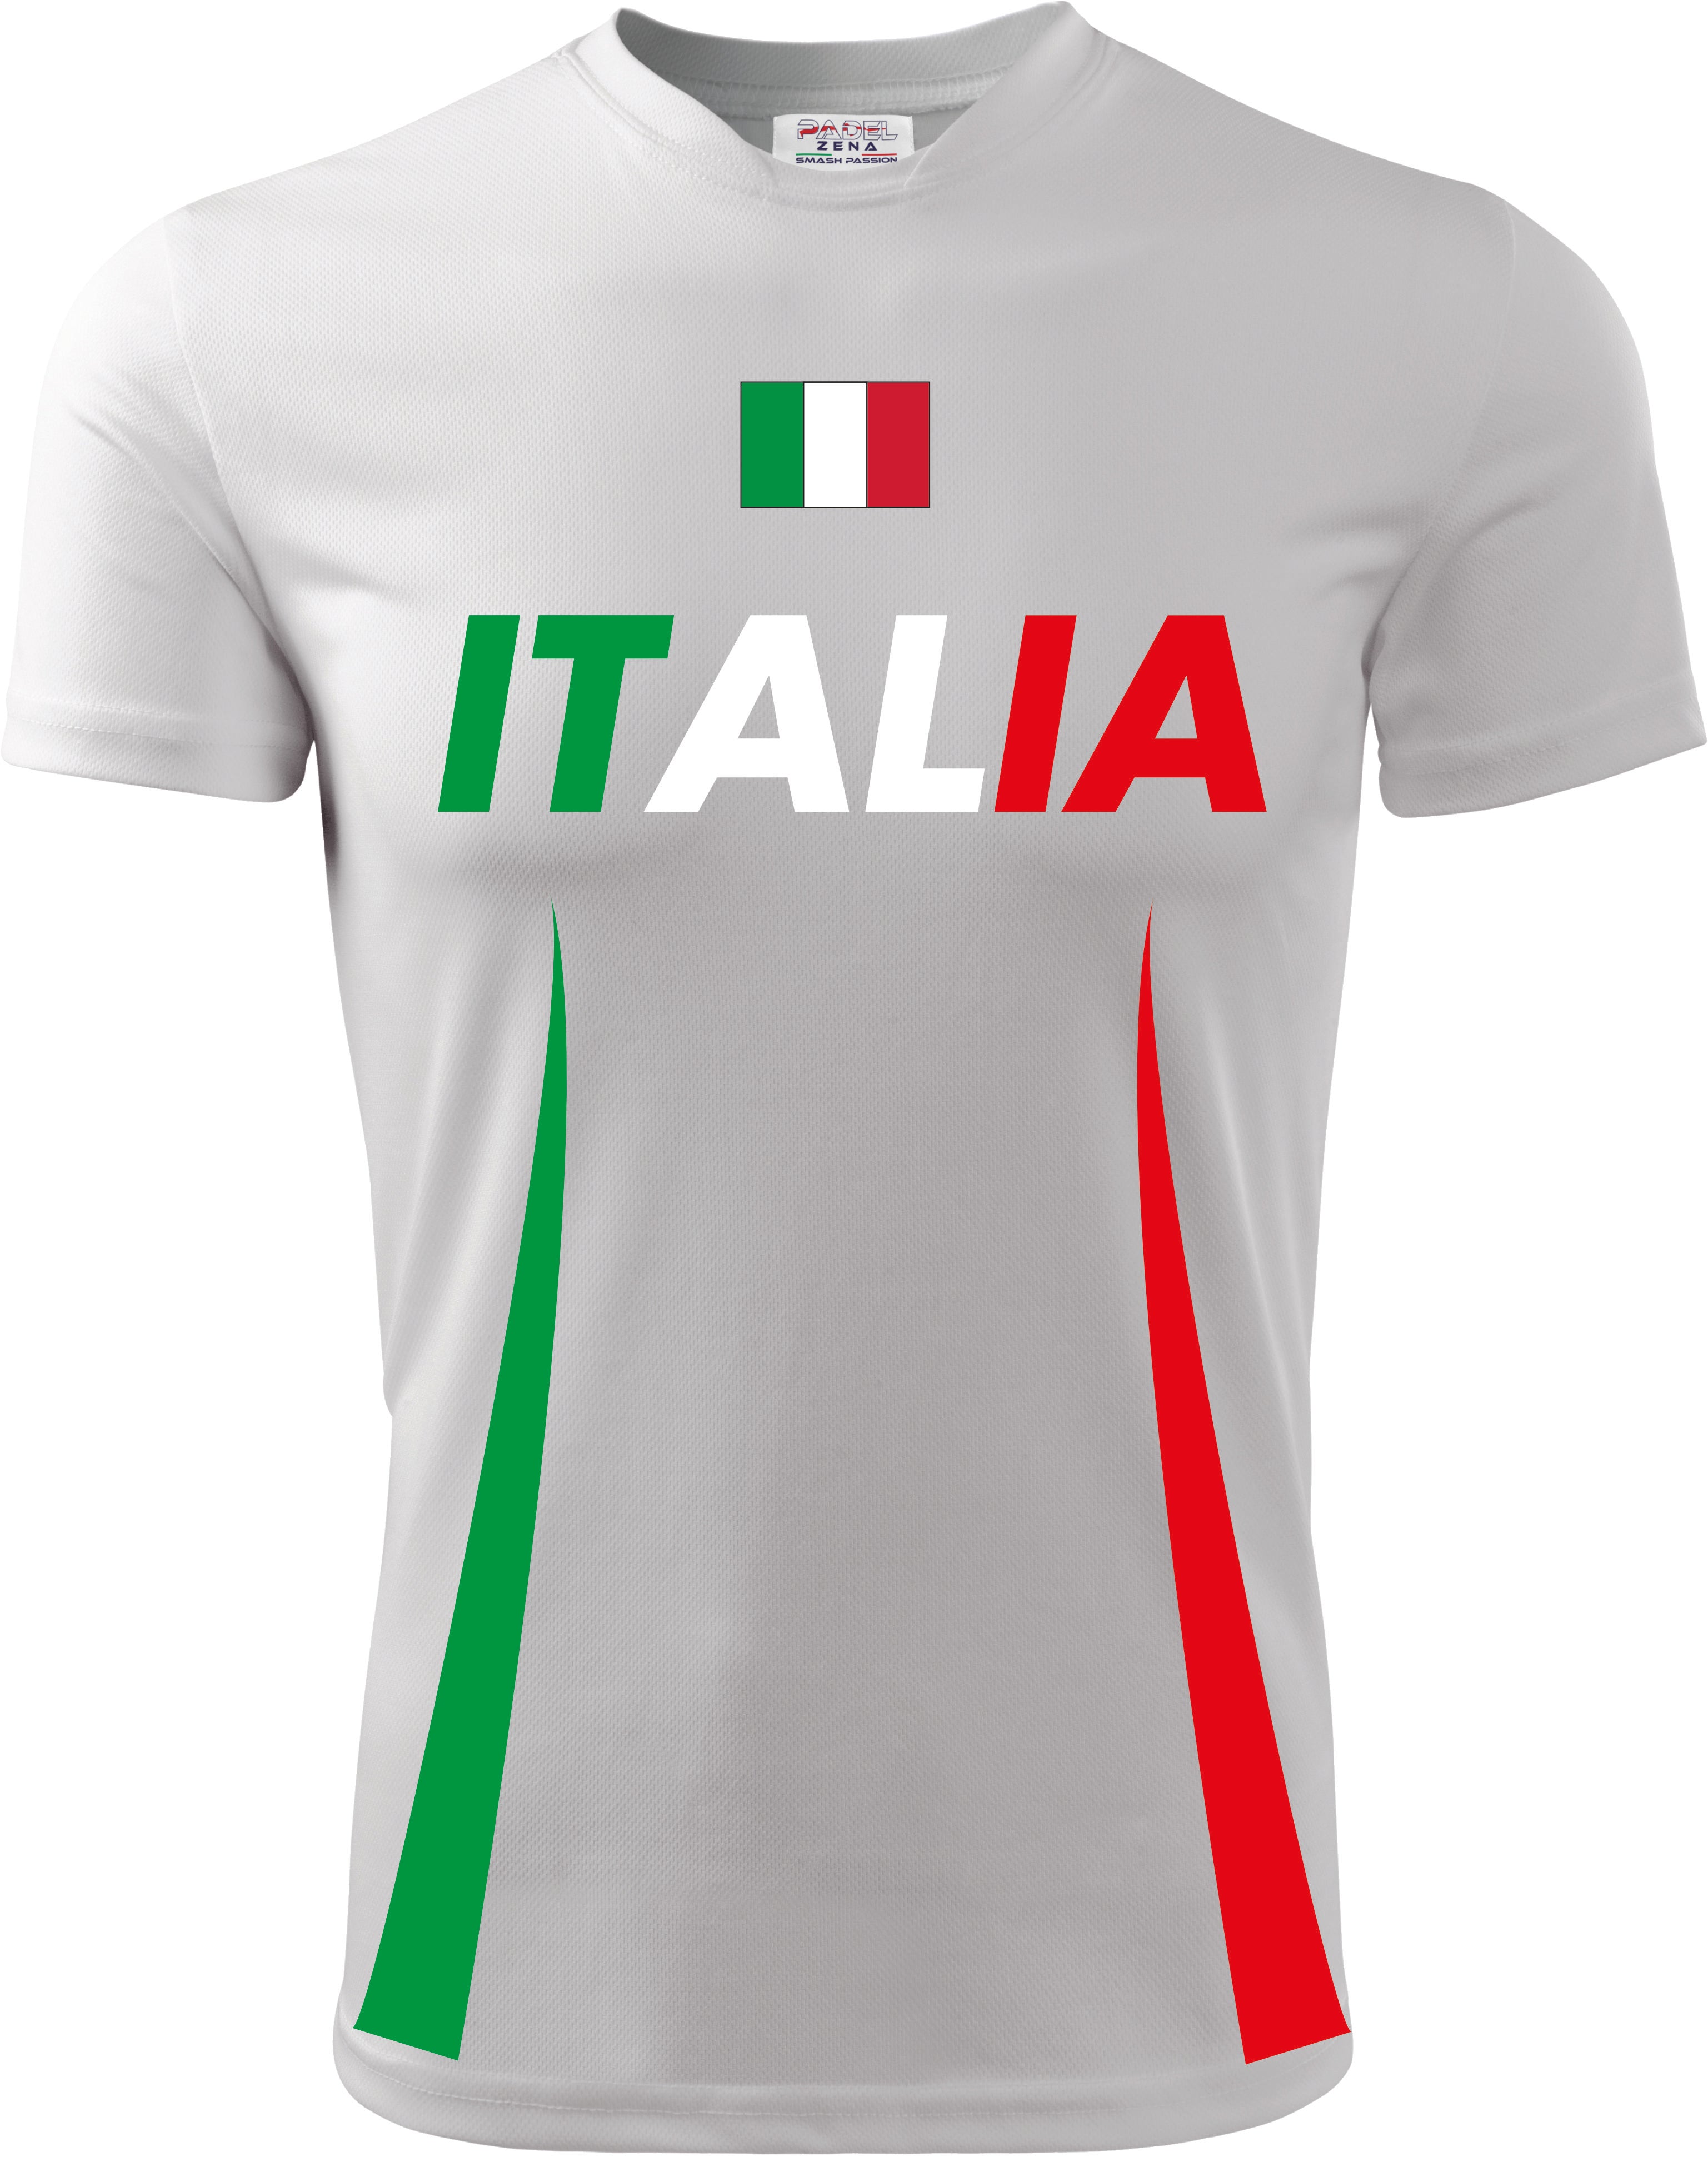 Camiseta Europea Padel ITALIA 01